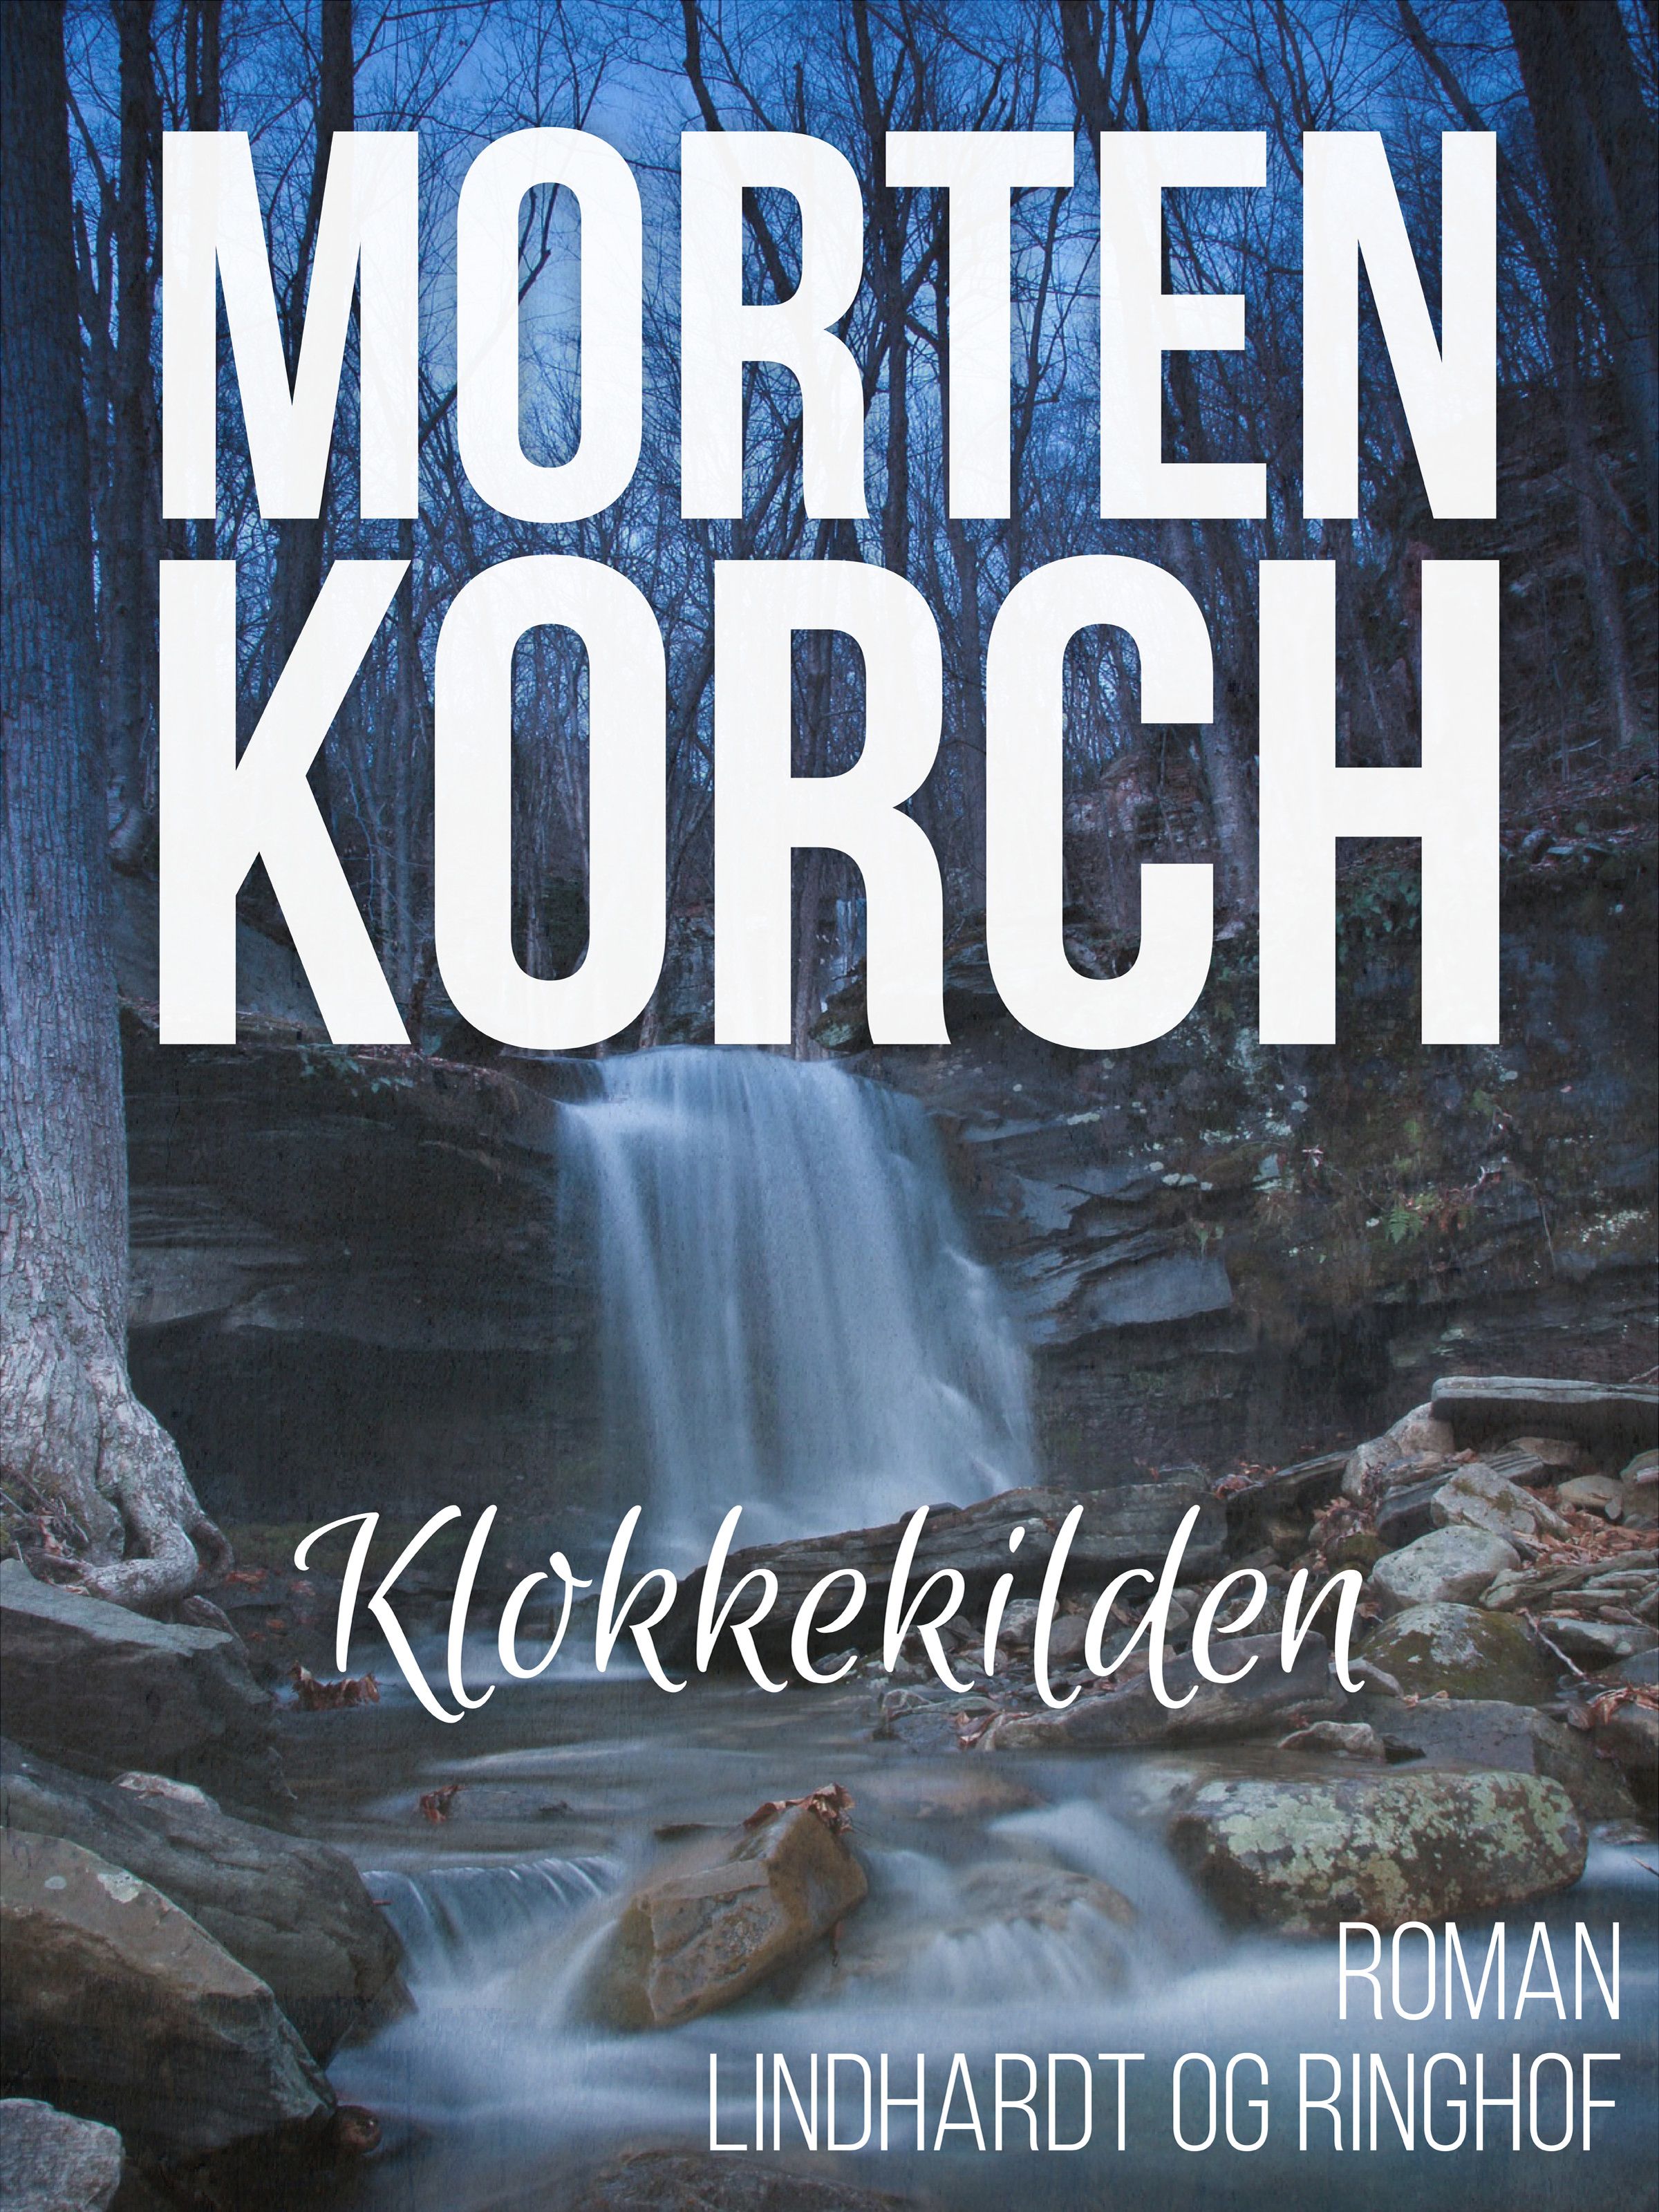 Klokkekilden, eBook by Morten Korch